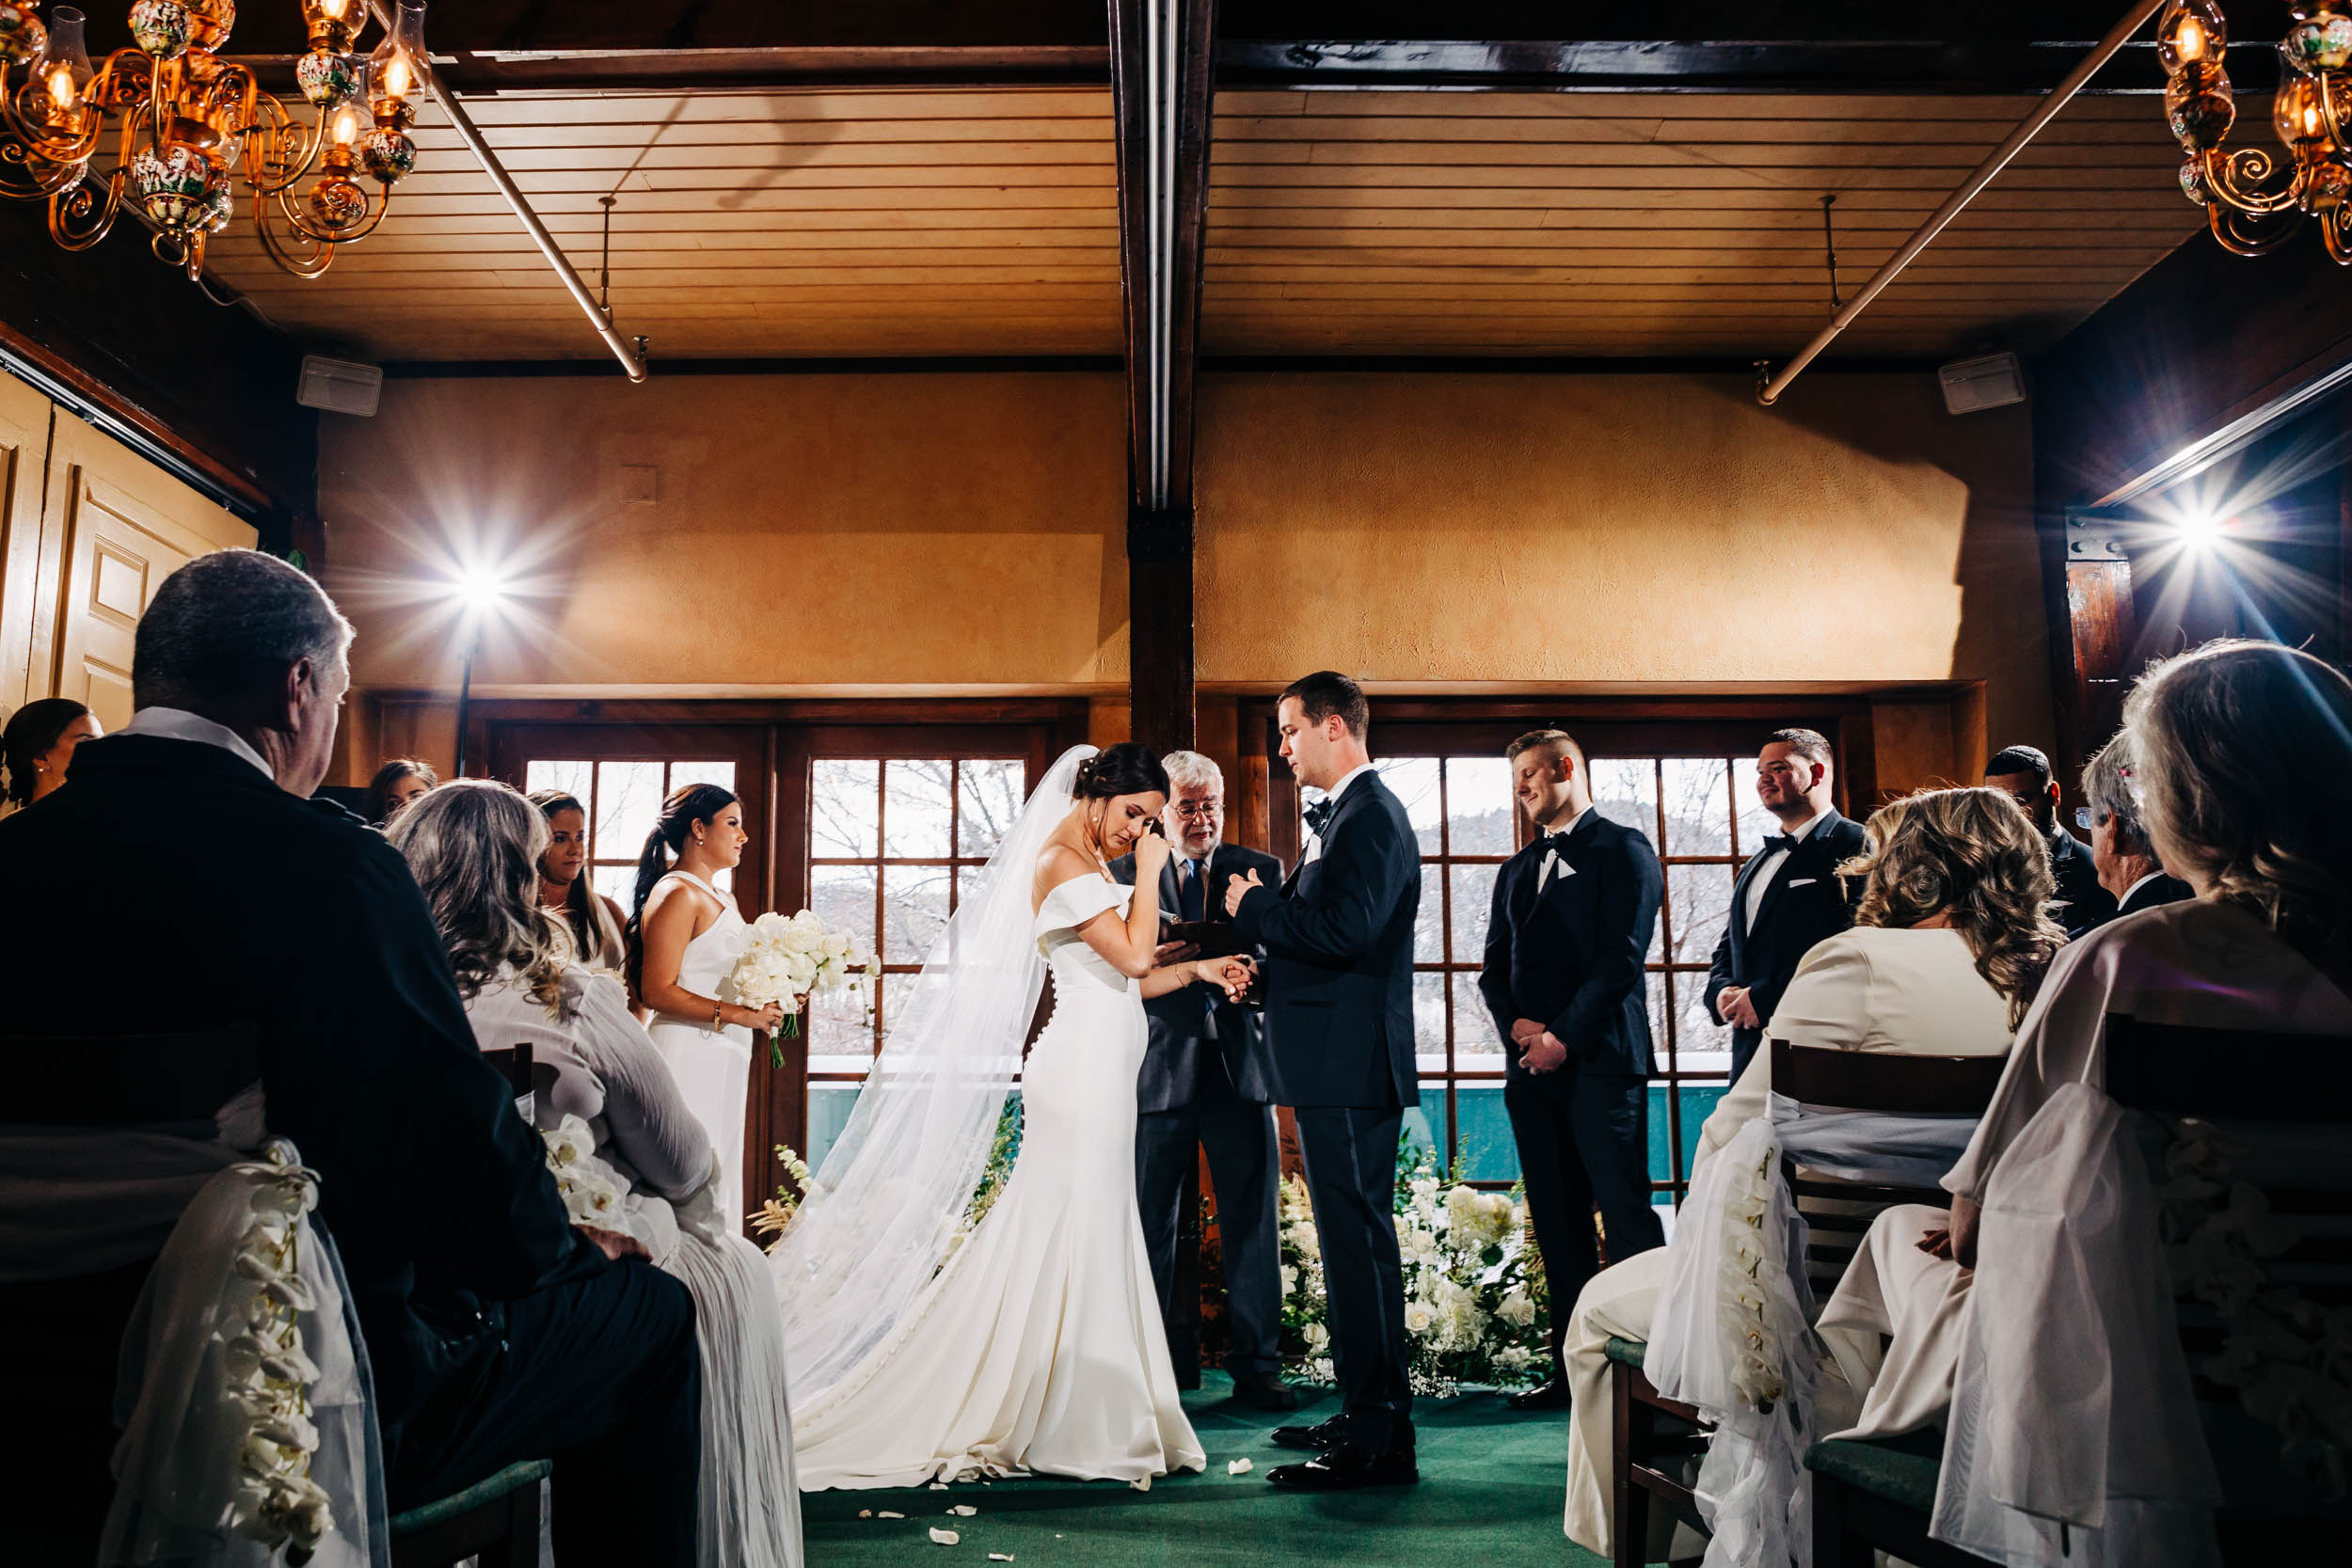 Indoor wedding ceremony at Greenbriar Inn in boulder colorado